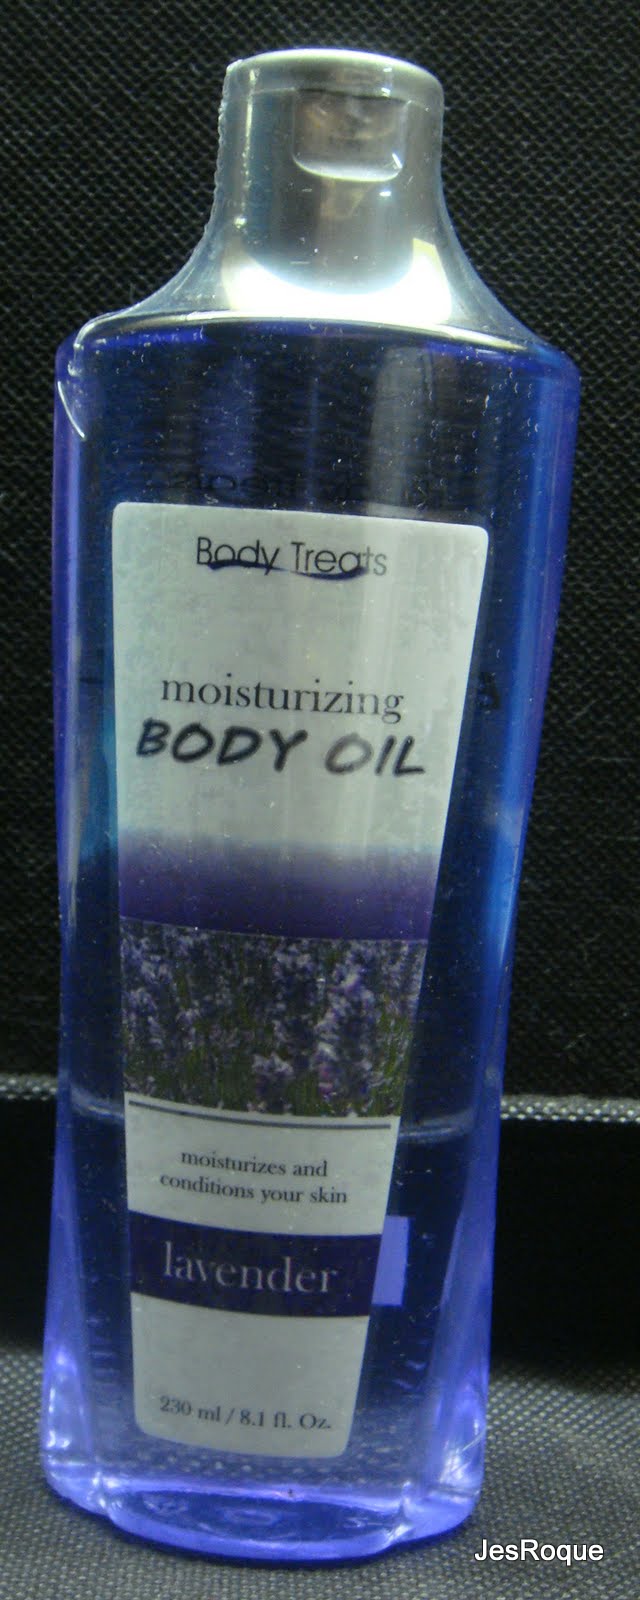 Review: Body Treats Moisturizing Body Oil in Lavender